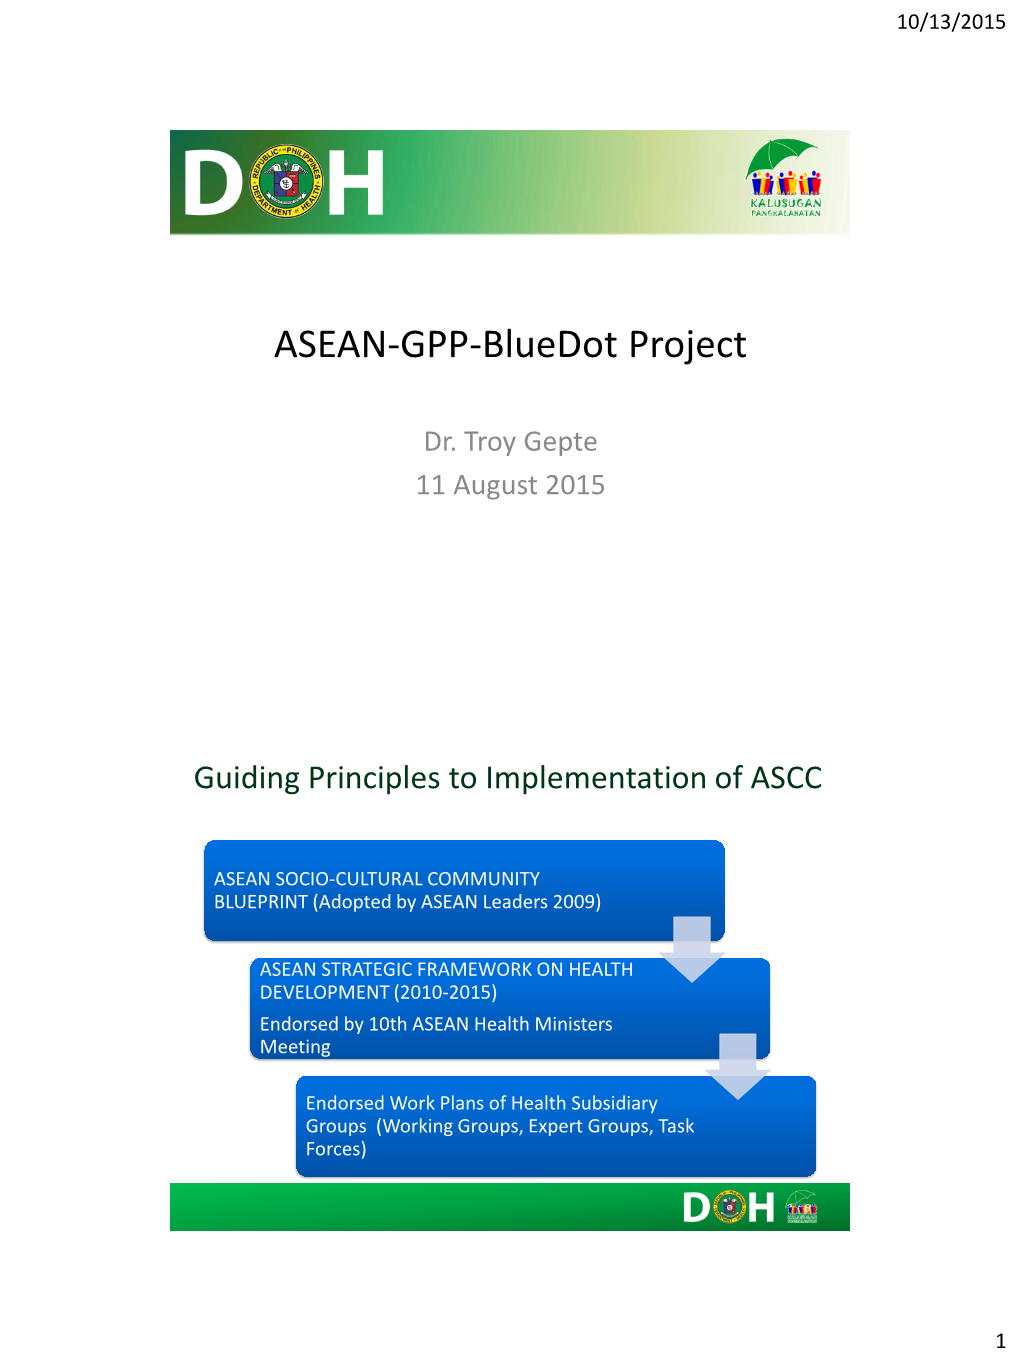 ASEAN-GPP-Bluedot Project